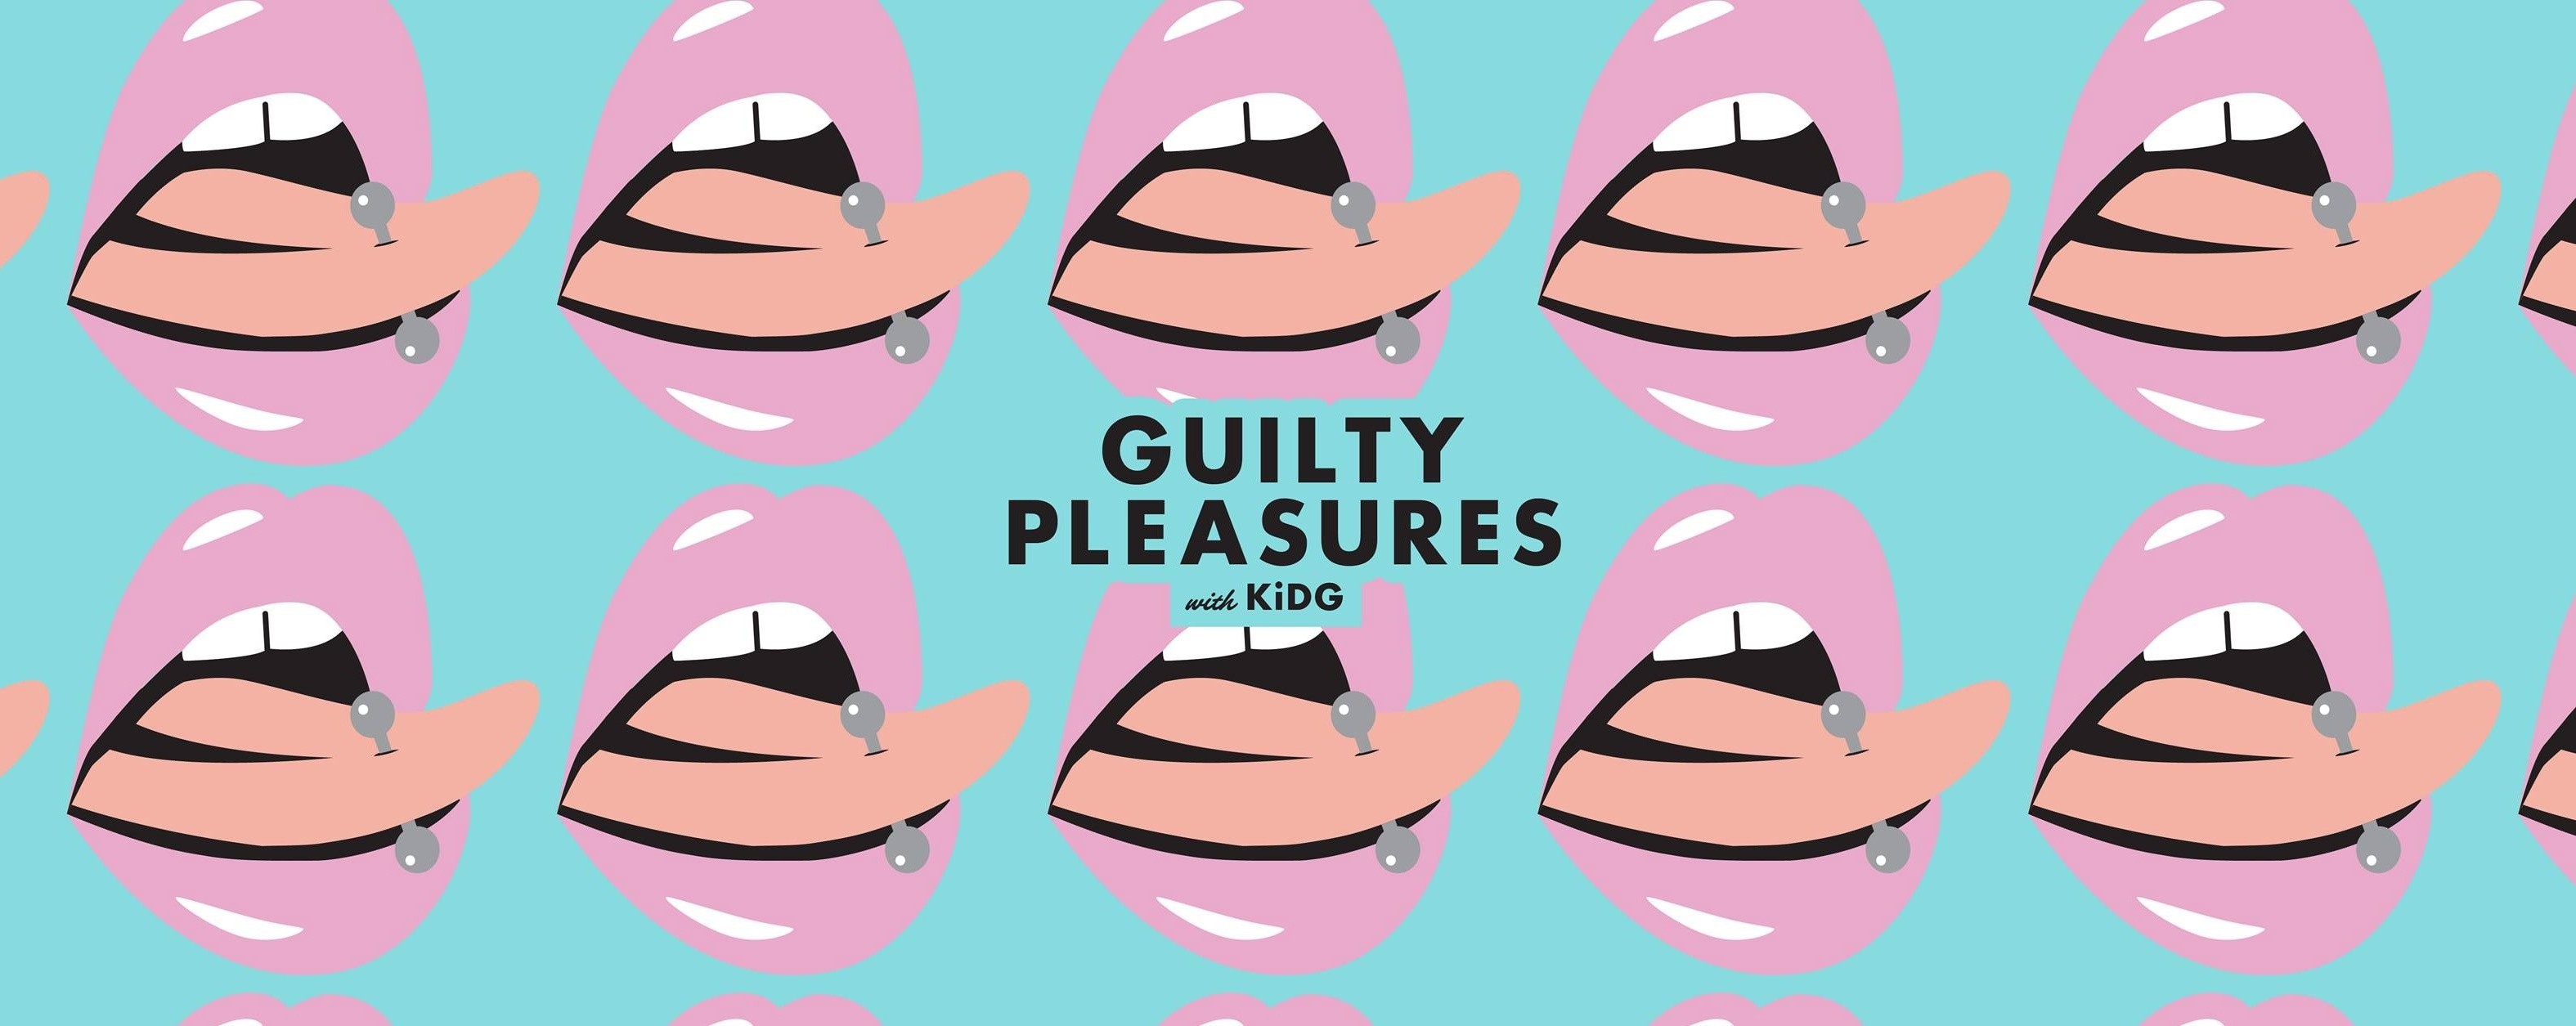 Guilty Pleasures - 19 August